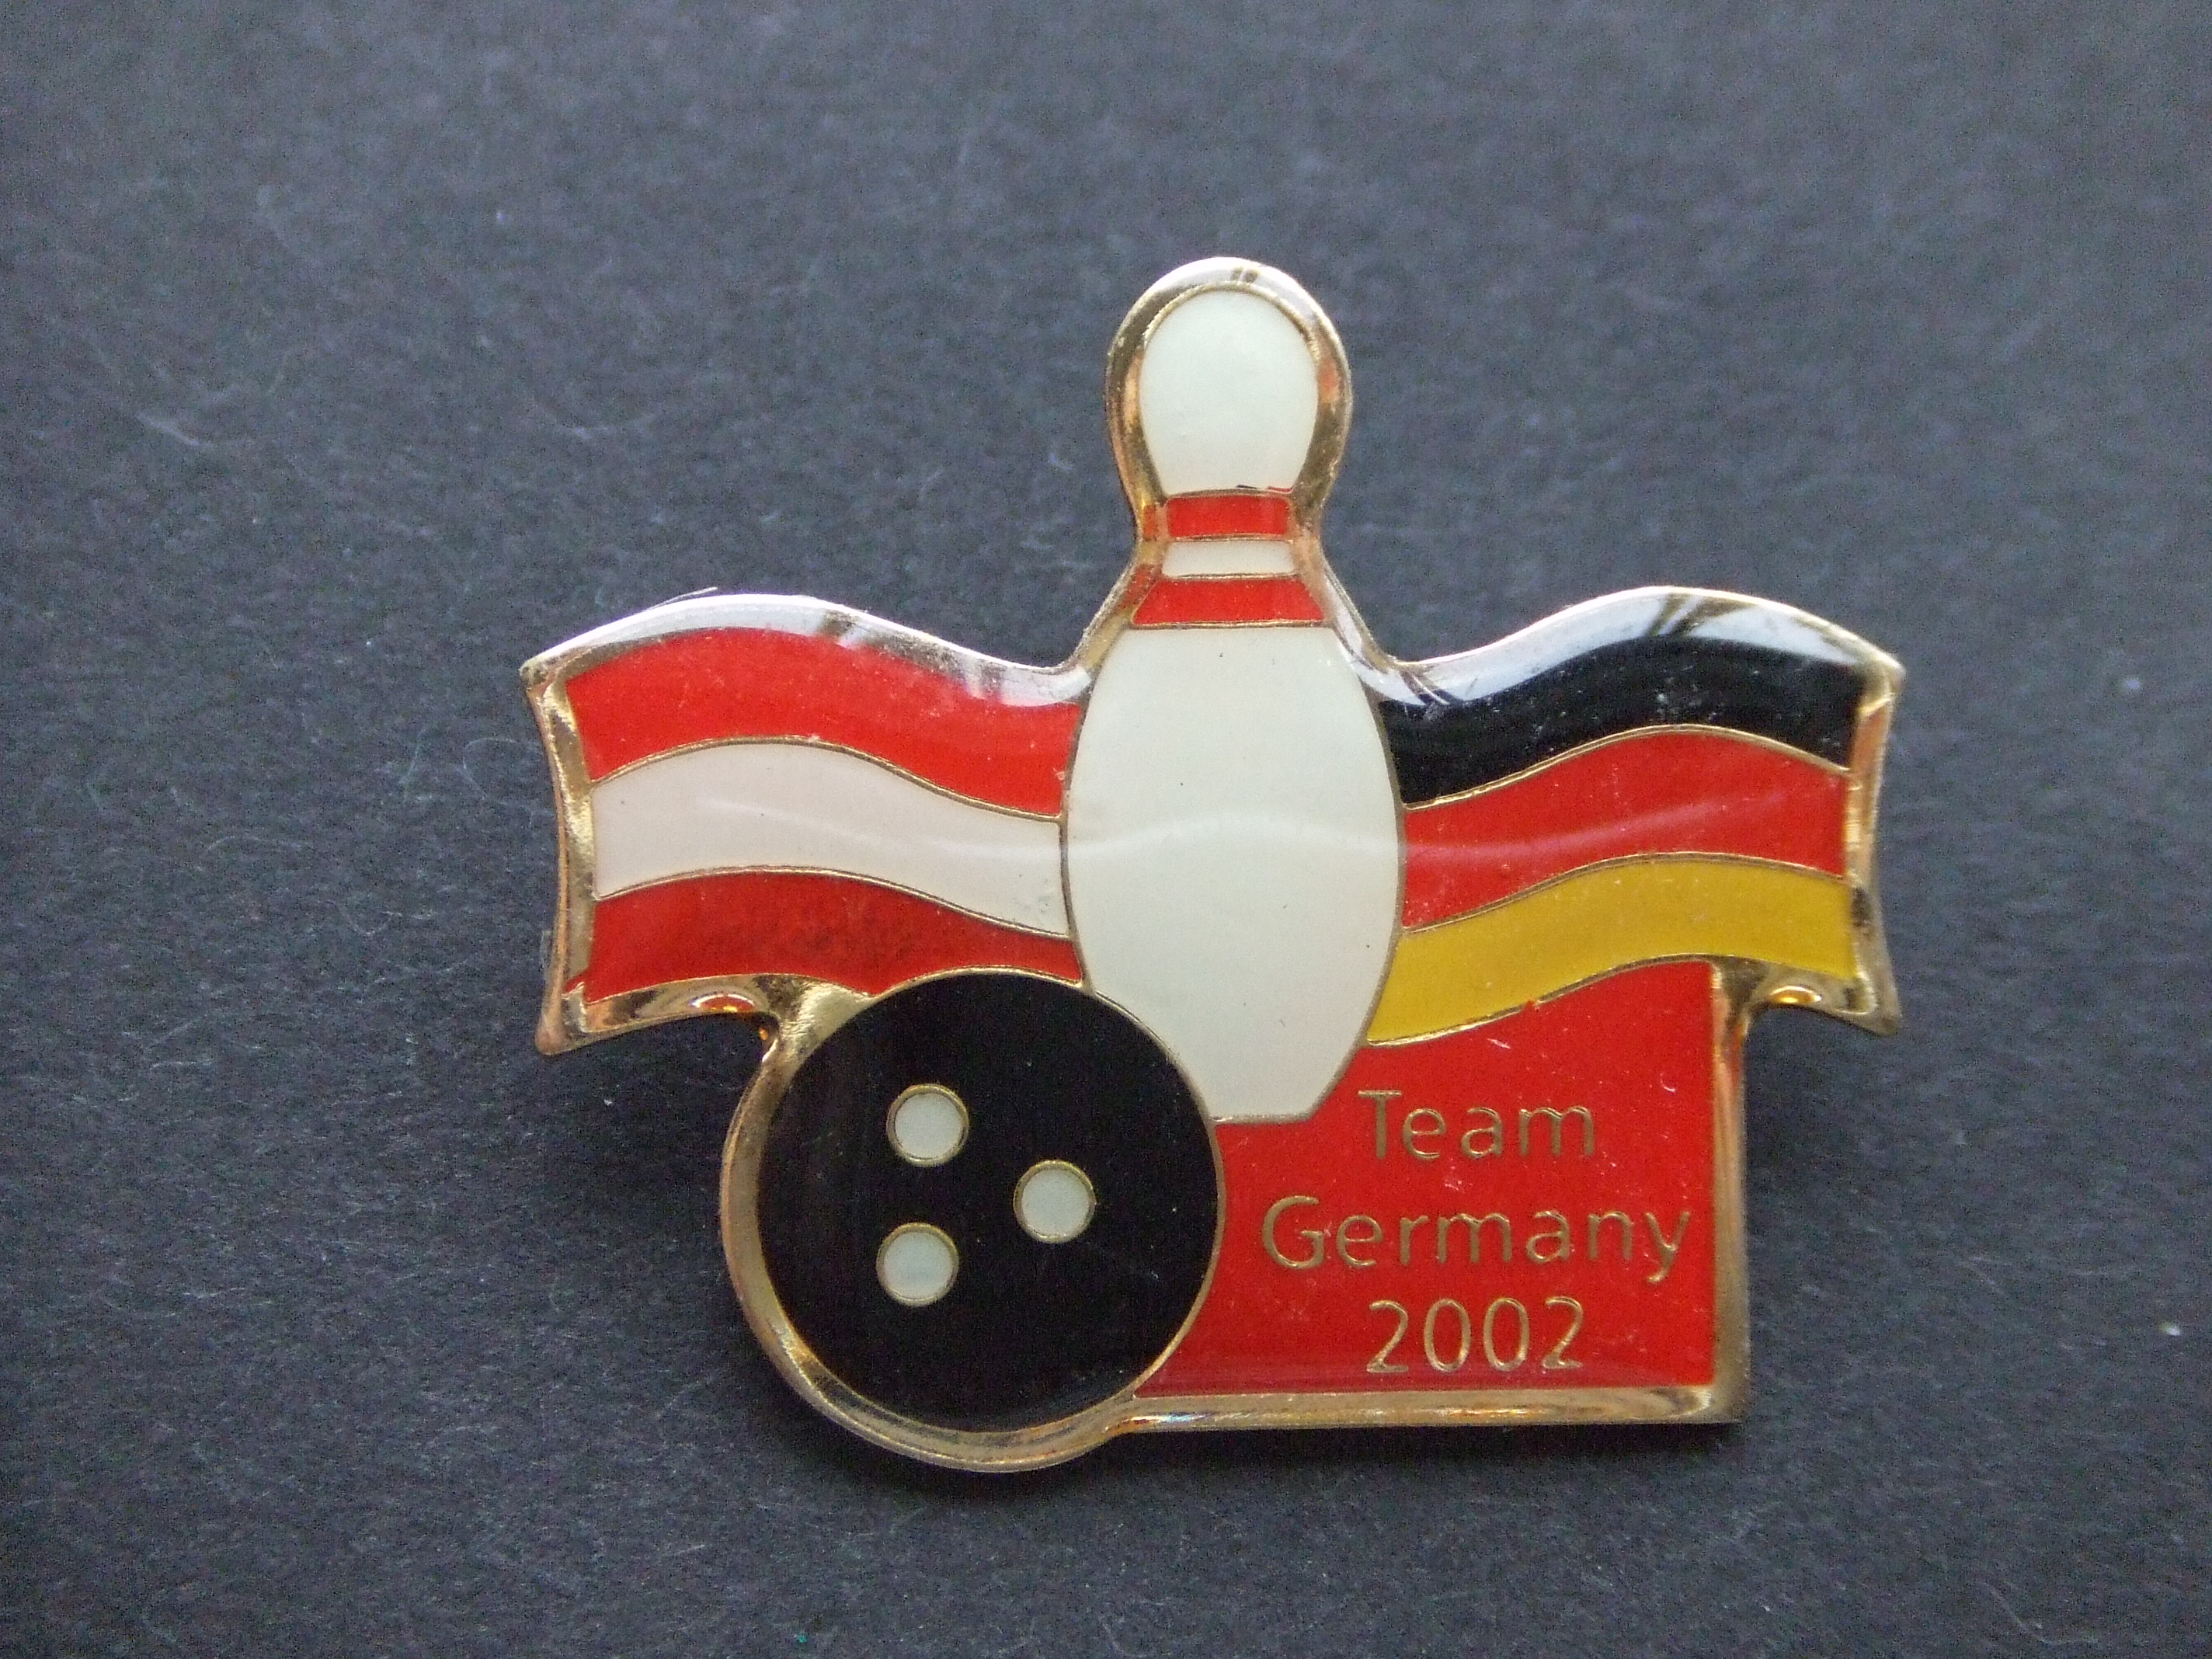 Bowling team Germany 2002